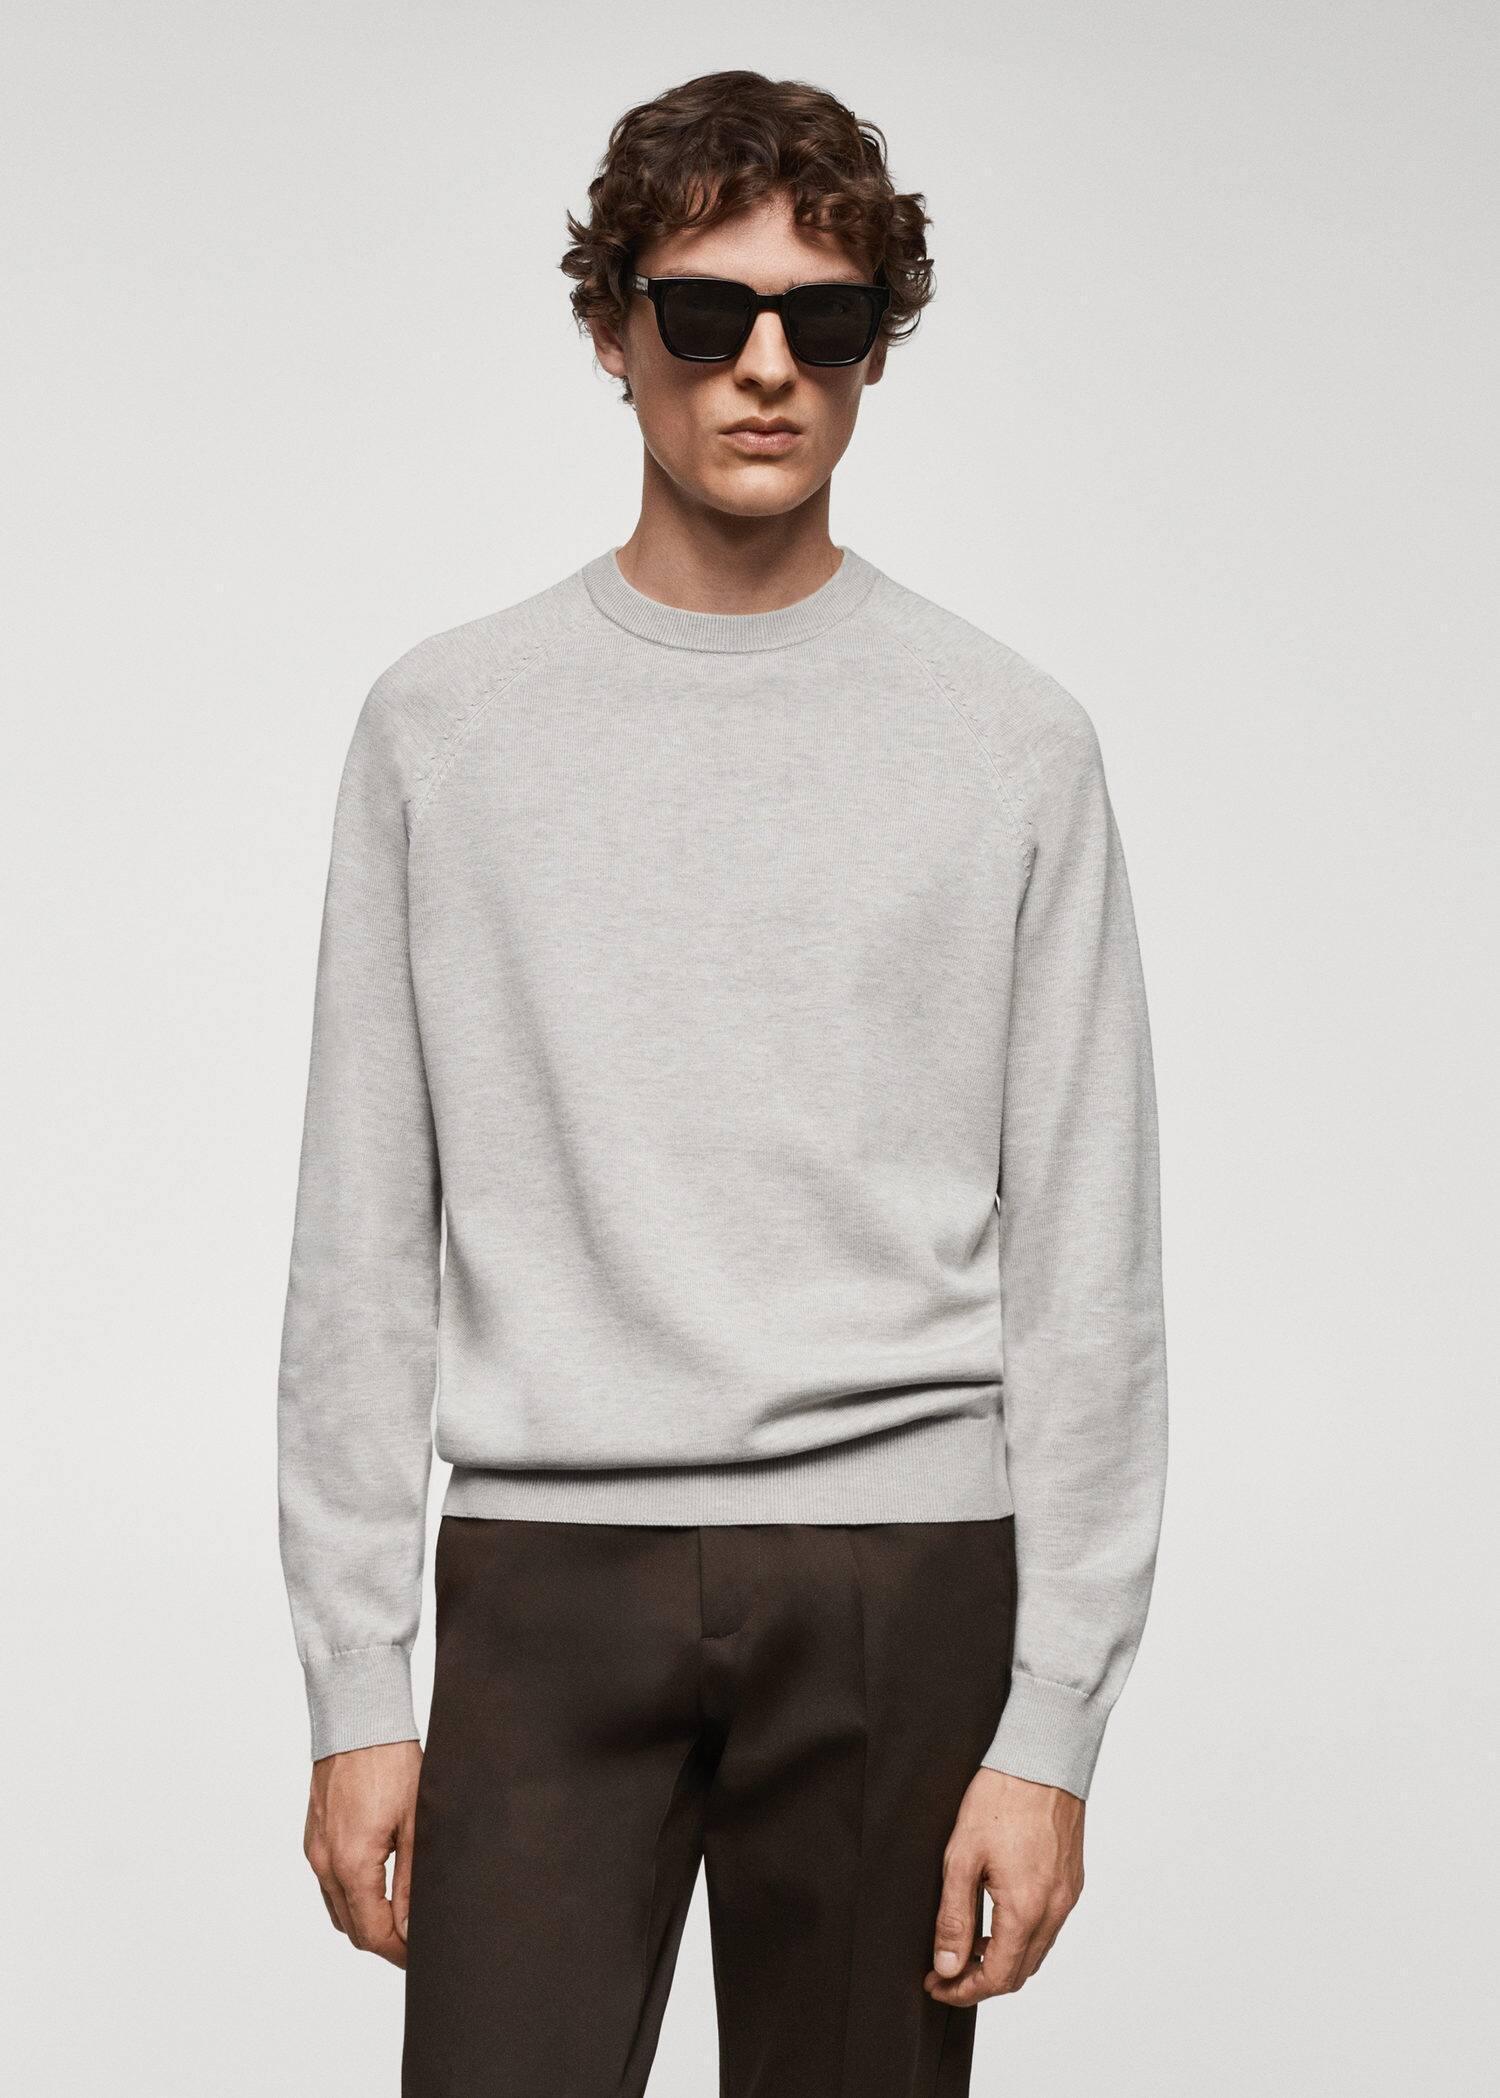 Mango - Brown Lt-Pastel Fine-Knit Cotton Sweater